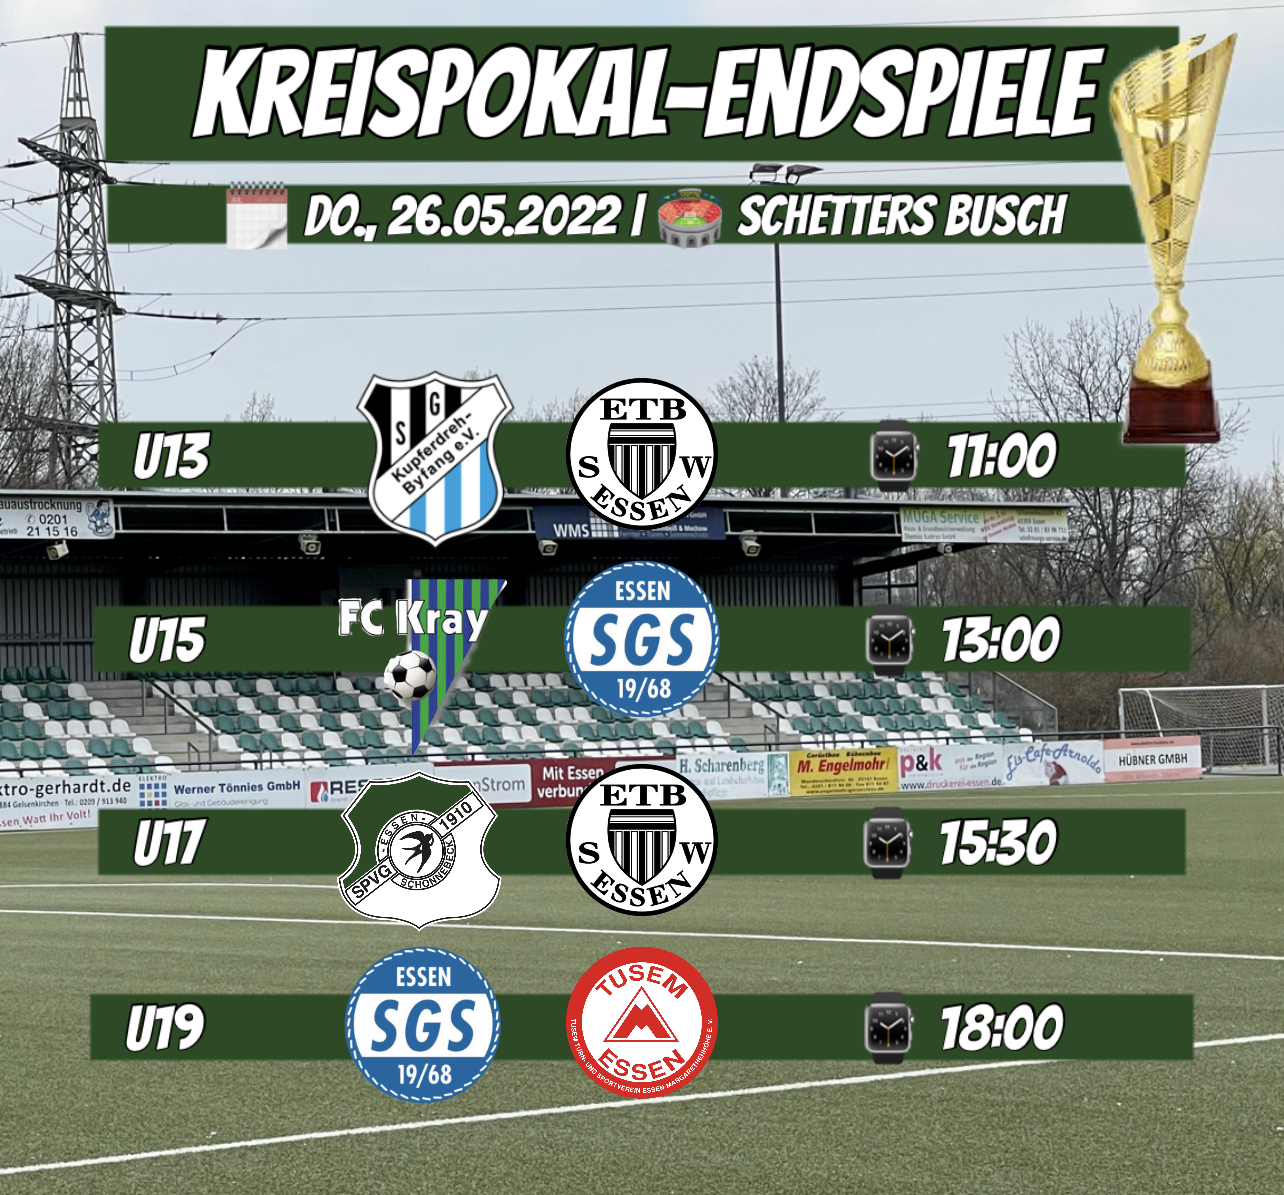 Kreispokal-Endspiele am Schetters Busch post thumbnail image